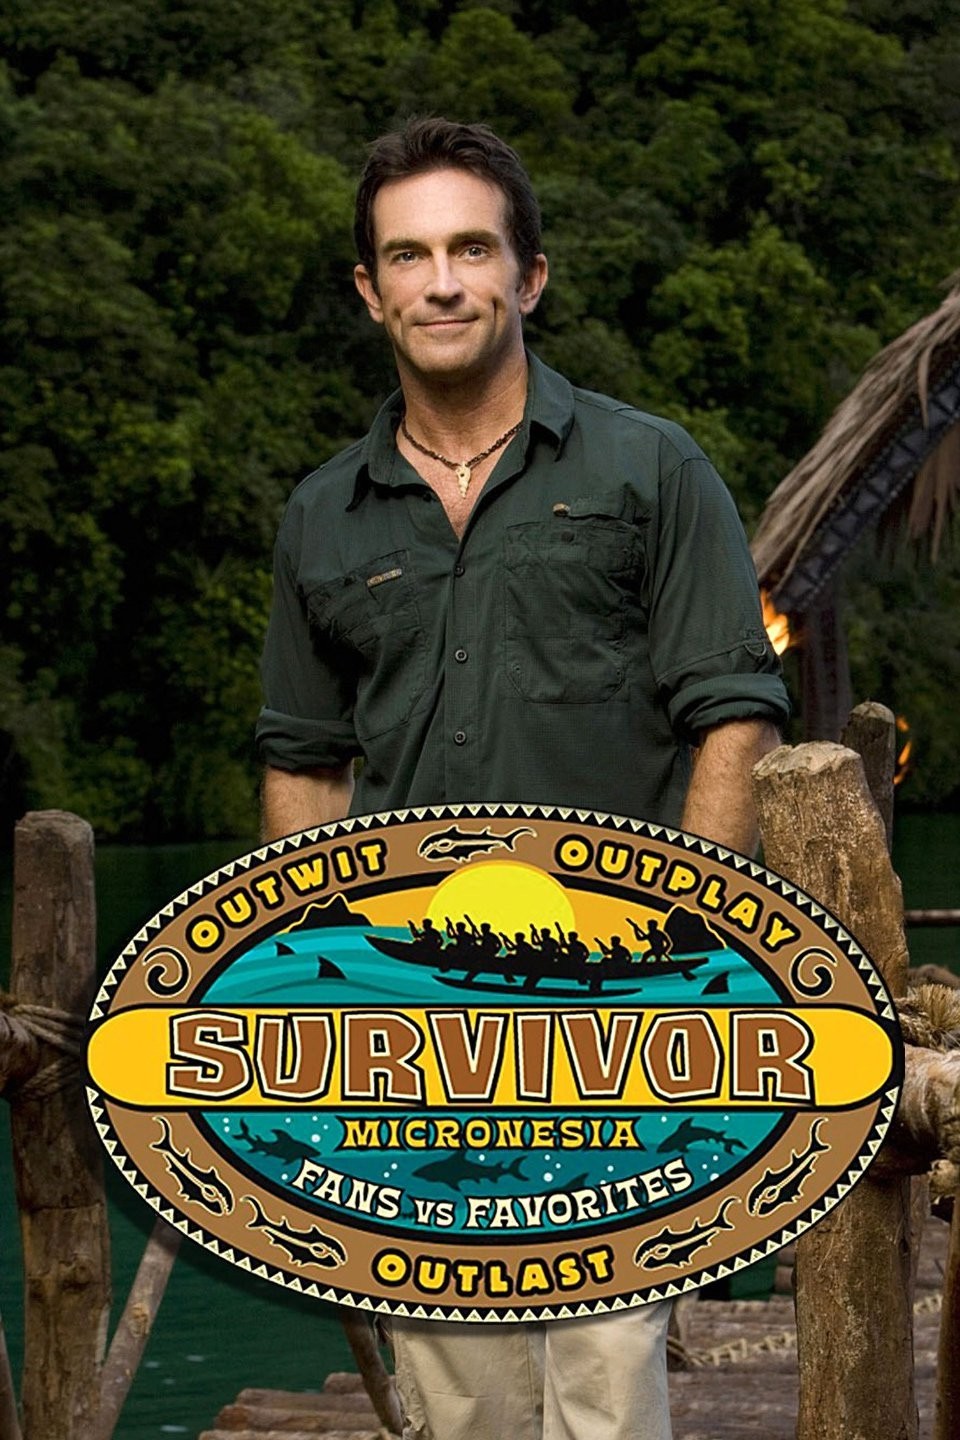 Meet Survivor Season 45 Cast on Paramount Plus - Ultimate Guide